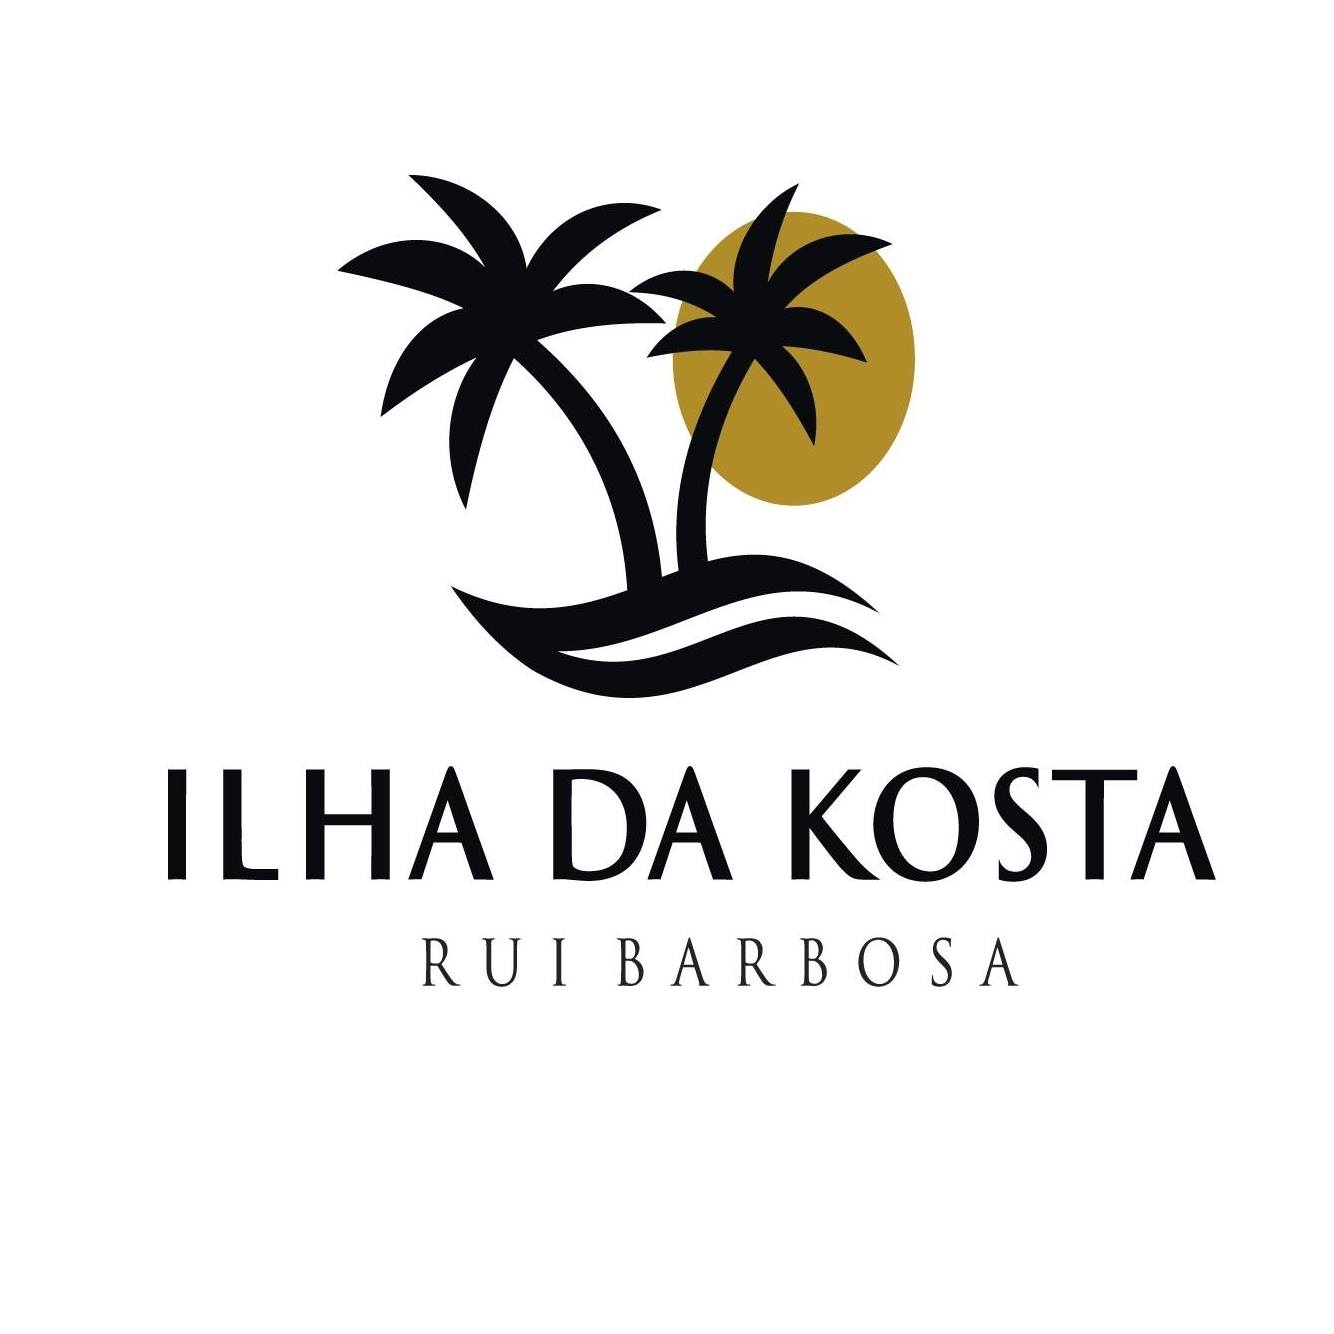 Ilha da Kosta Rui Barbosa